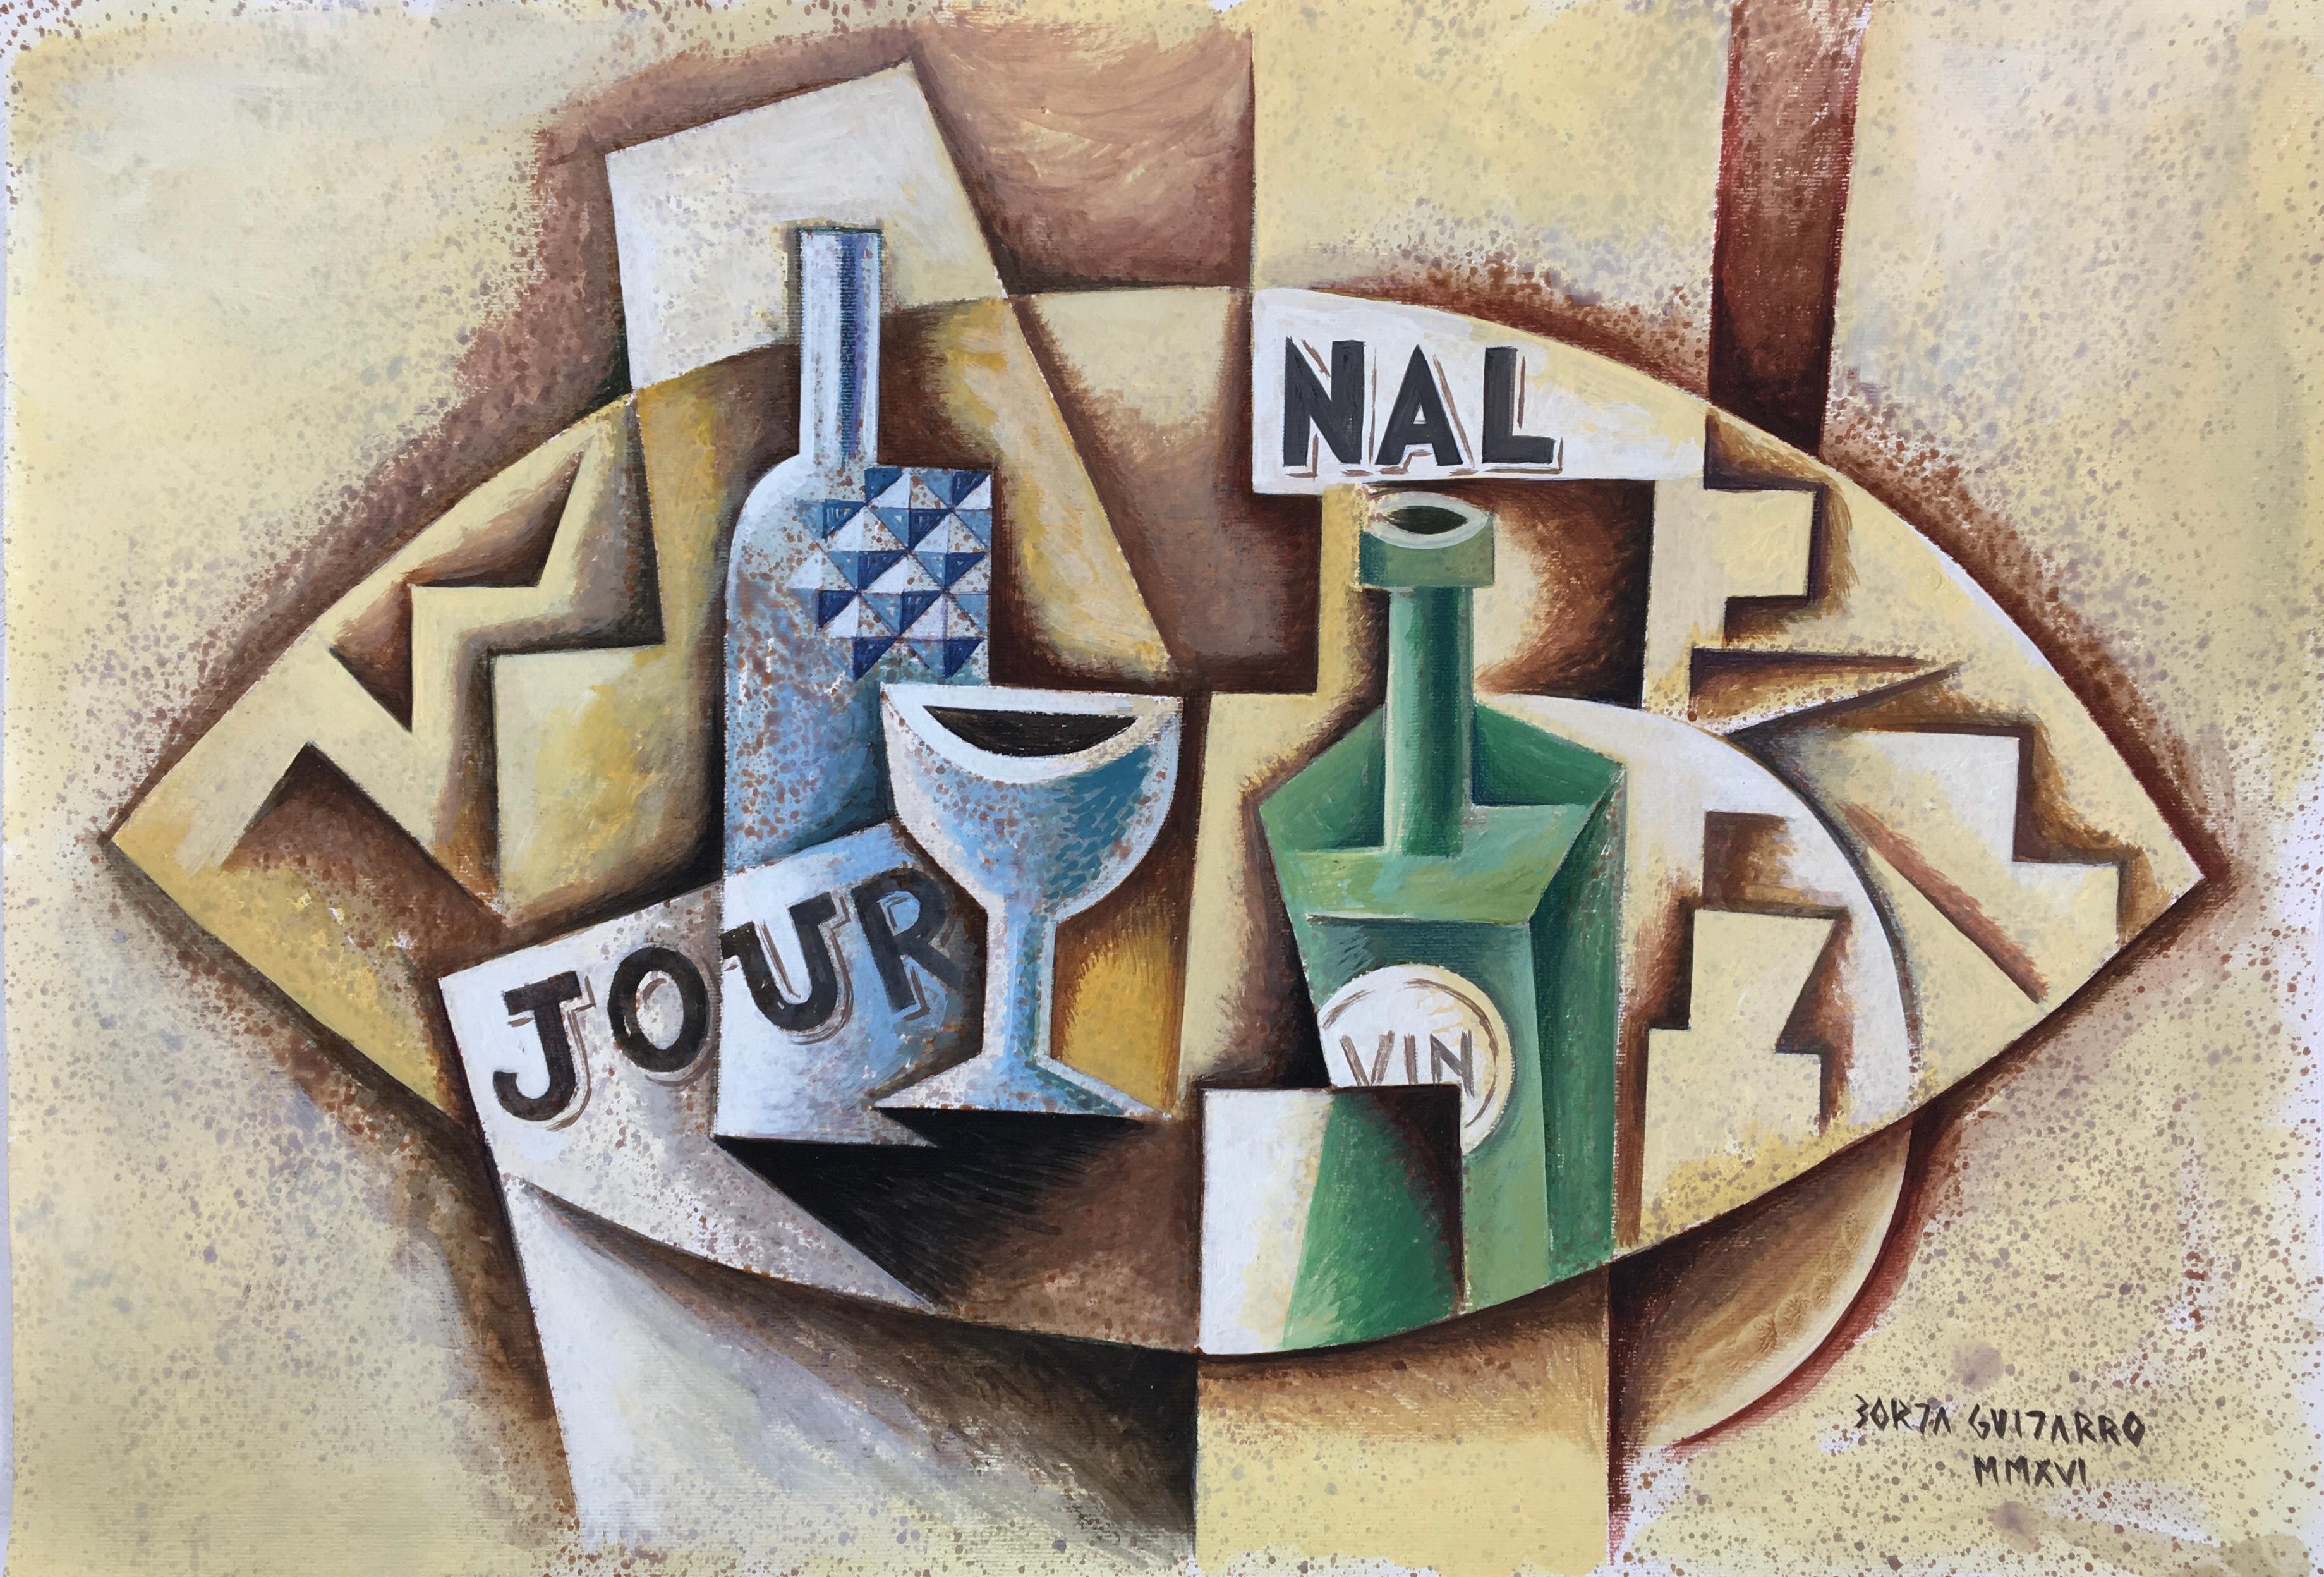 Borja Guijarro Still-Life Painting - Journal - original cubism still life study artwork modern abstract expressionism